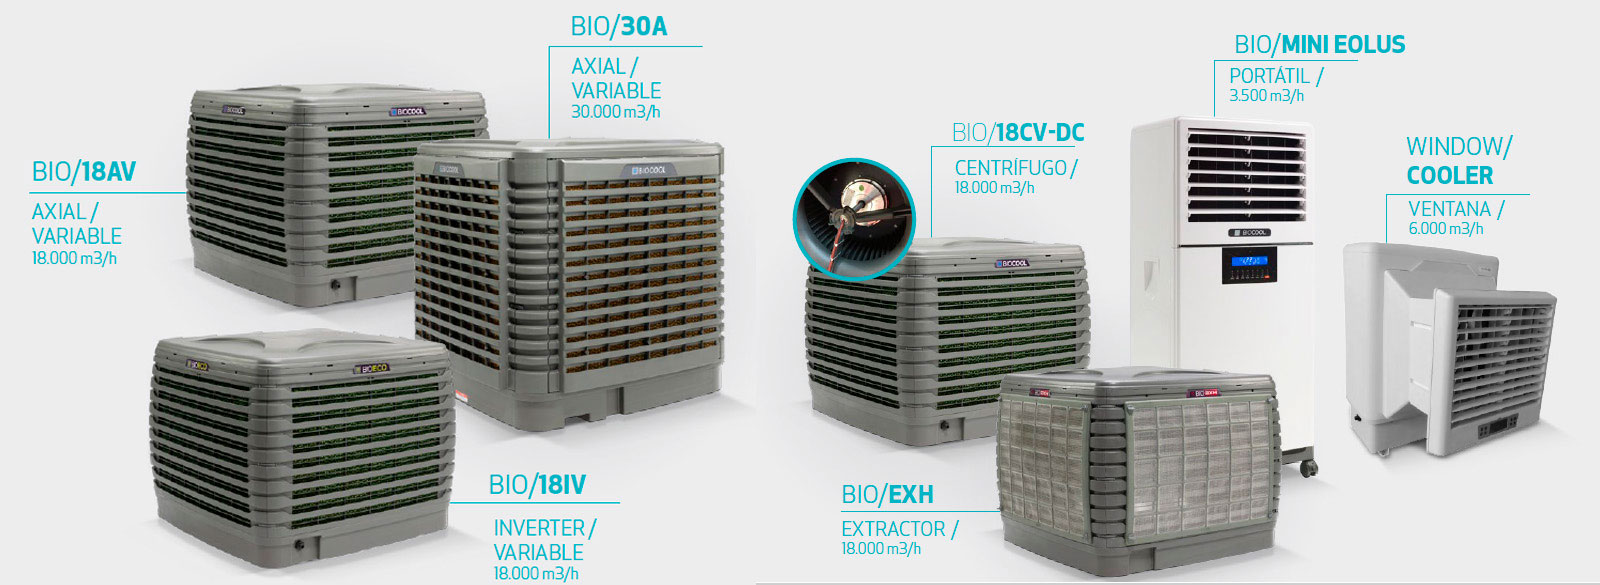 Gama de climatizadores evaporativos biocool